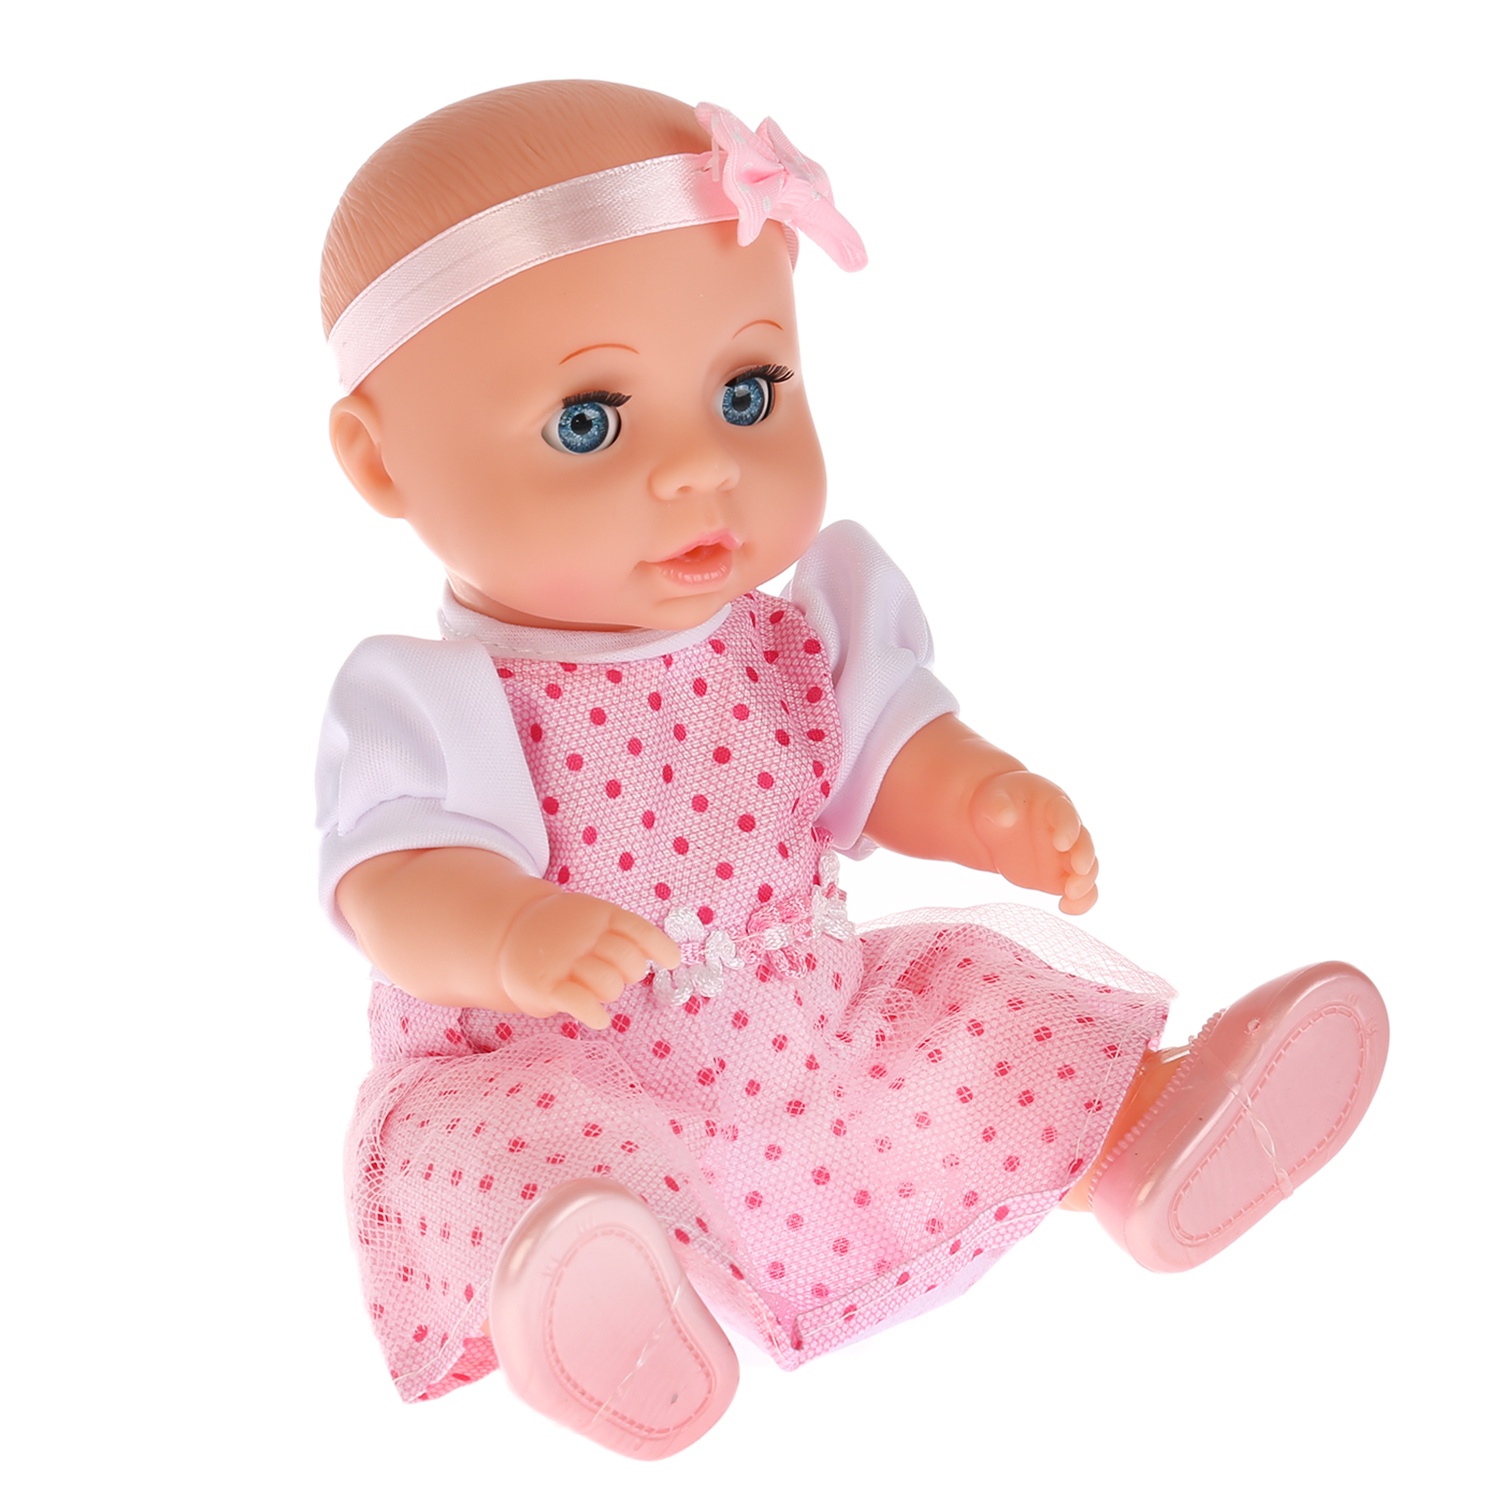 Кукла пупси. Интерактивный пупс Карапуз, 20 см, y20dp-BB-ru. Карапузик кукла. Бупсы. Резиновые куклы для детей.